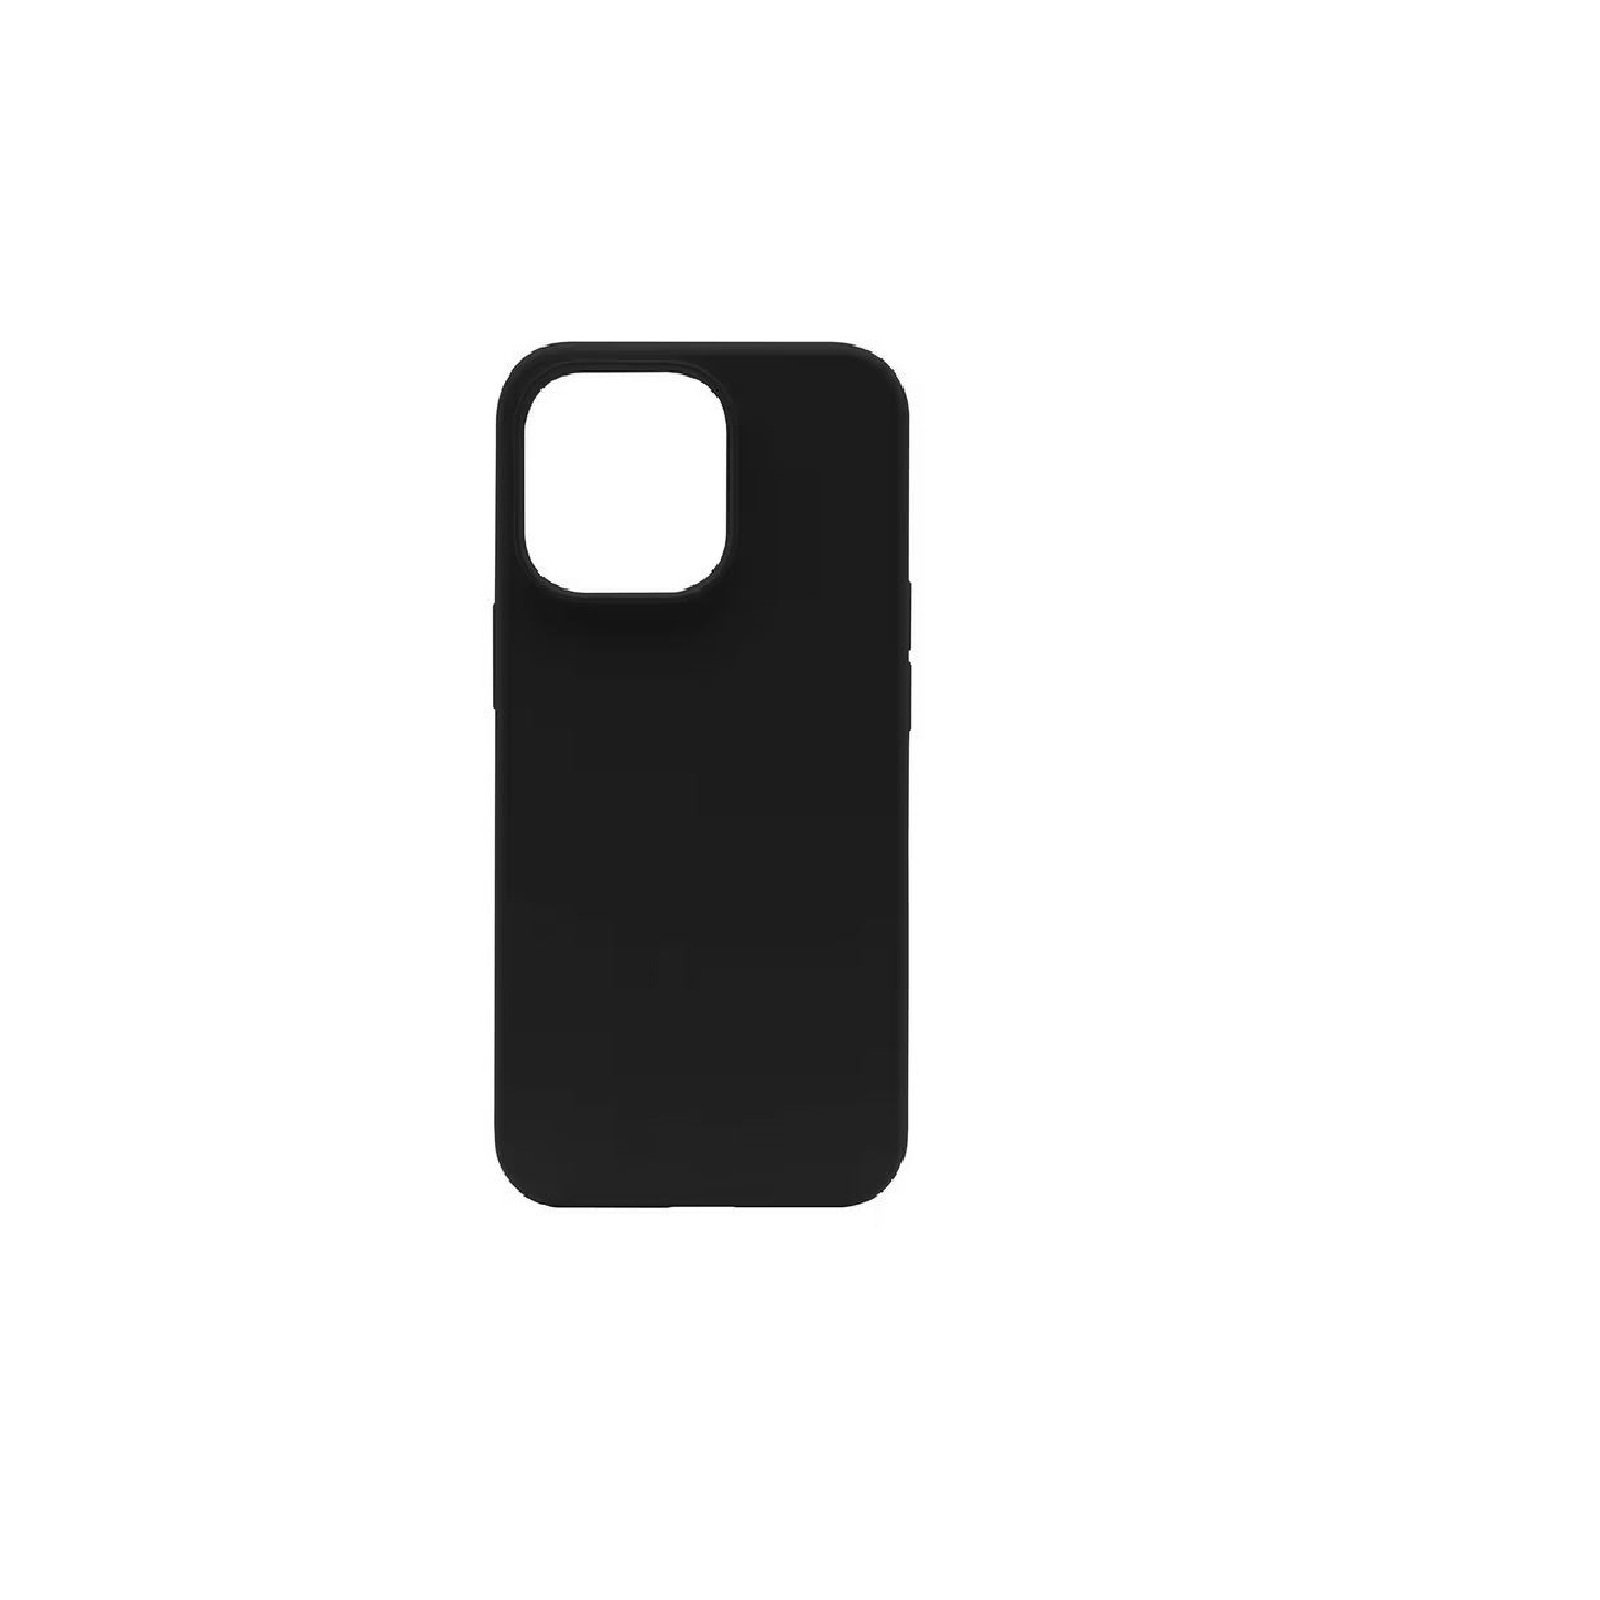 Fashion iPhone 11 Hard Case Black - Brand New